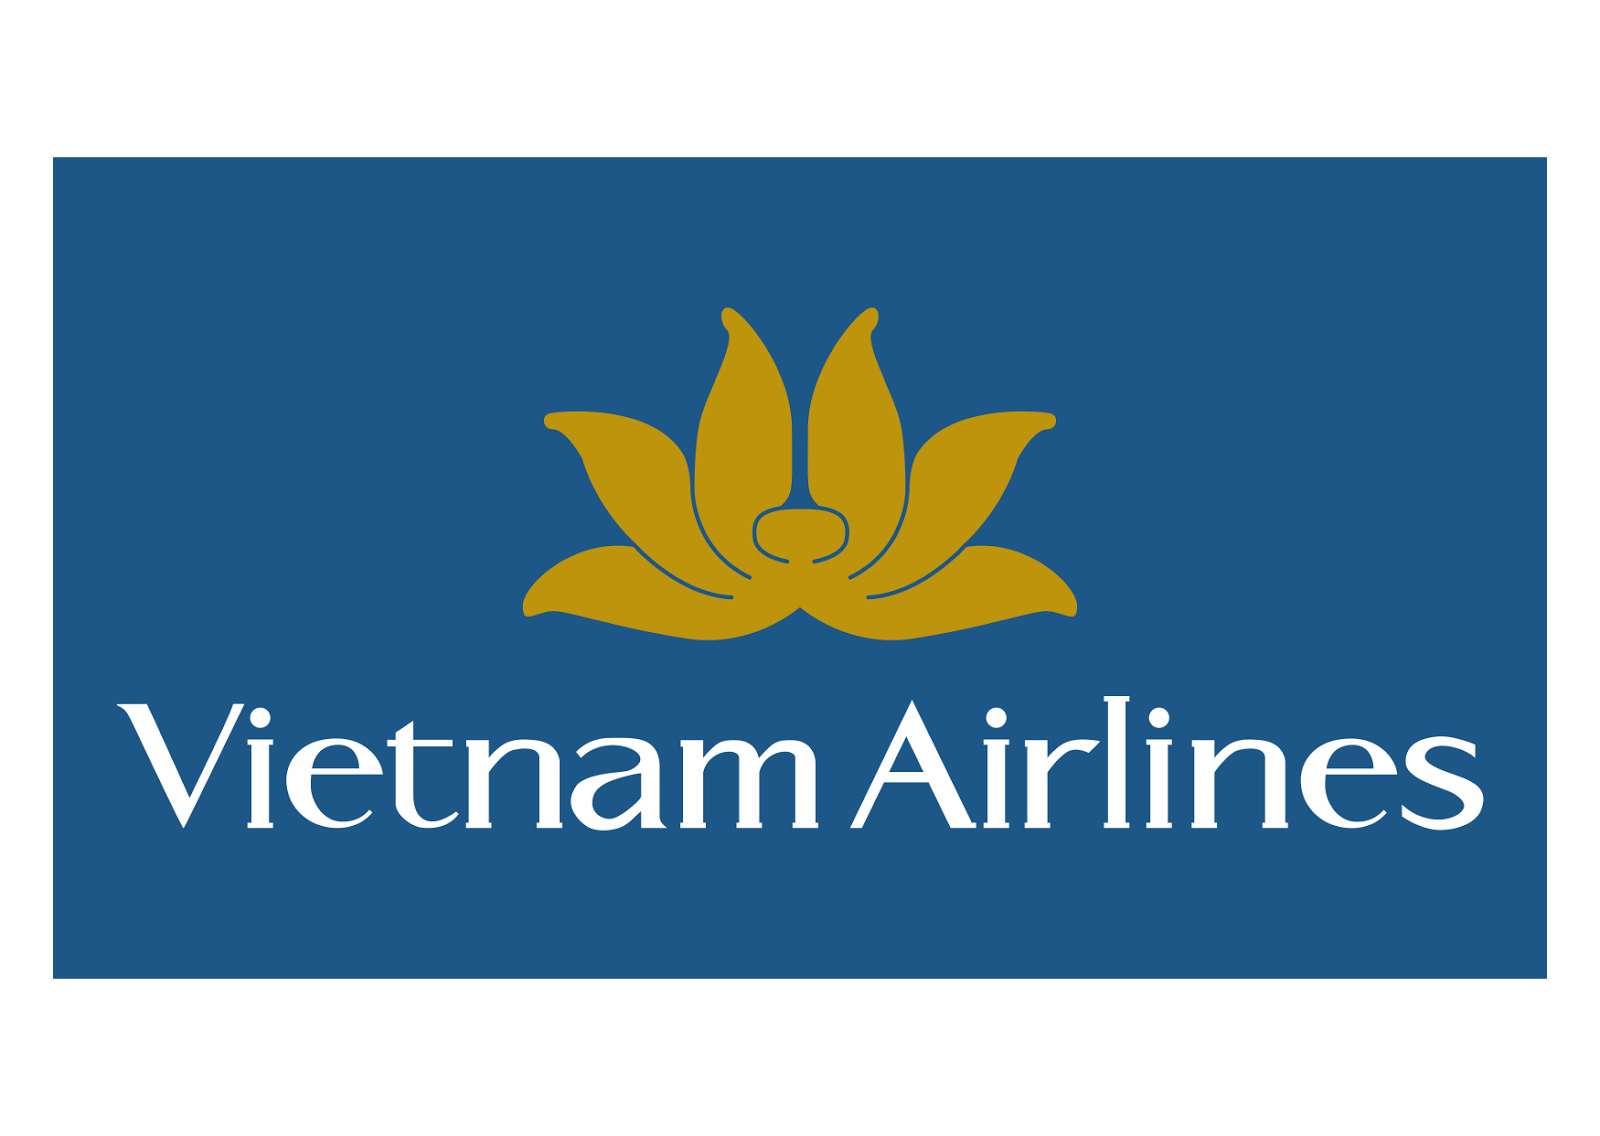 Vietnam Airlines Logo Vector - Vietnam Airlines Vector, Transparent background PNG HD thumbnail